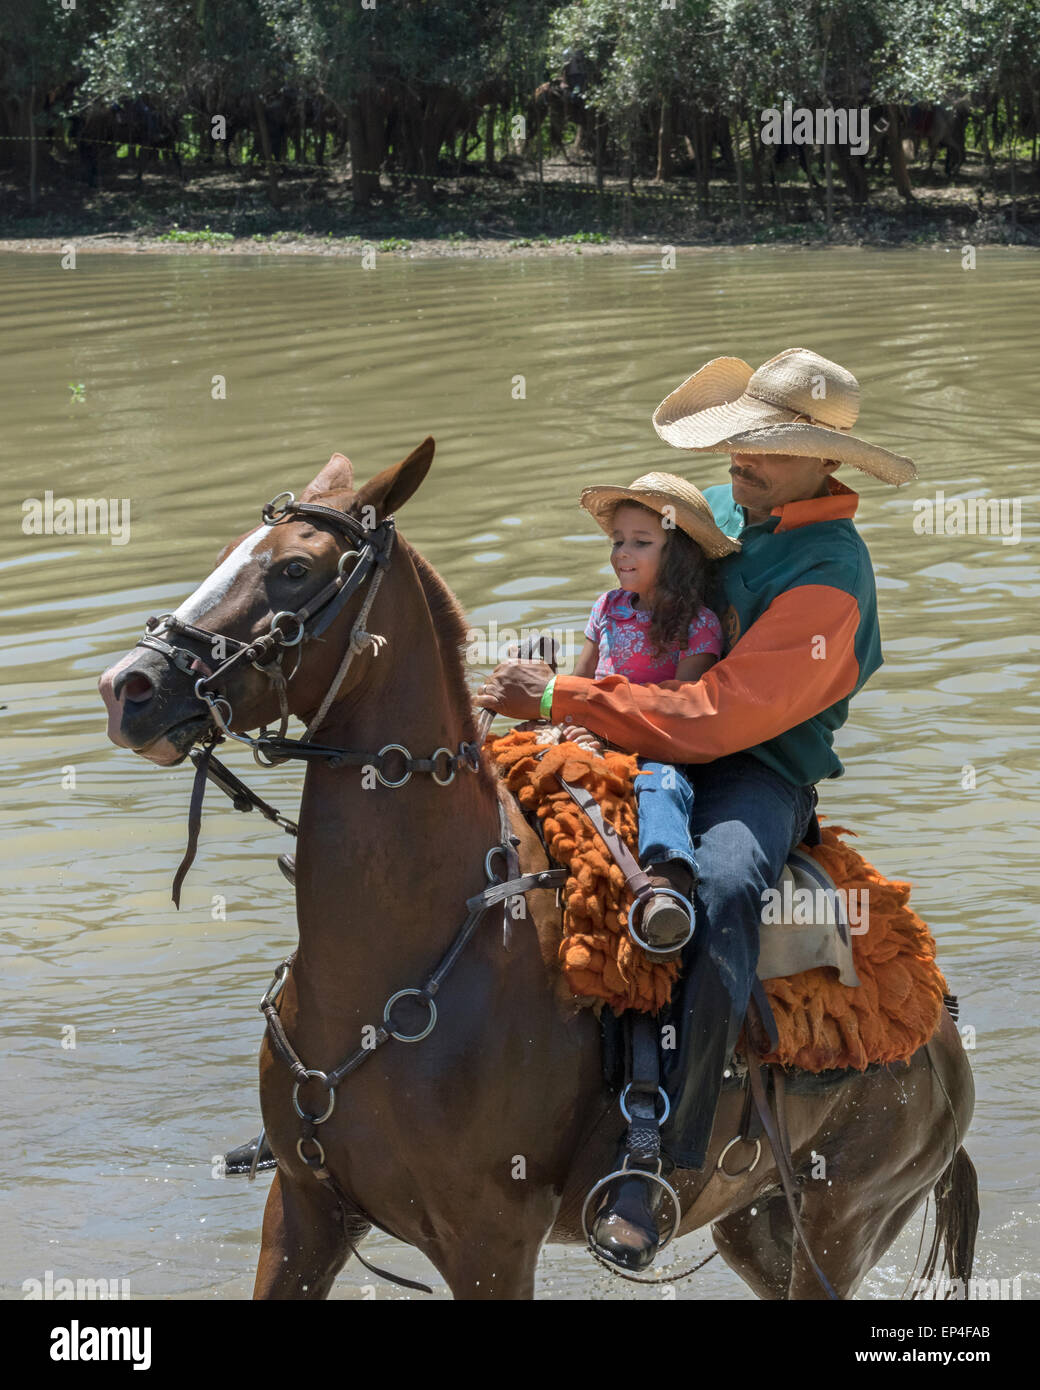 Rio Grande do Sul saddle gaucho crioulo horse fleece brown brownish lasso  rs rio grande do sul travel brazil animal mammal Stock Photo - Alamy